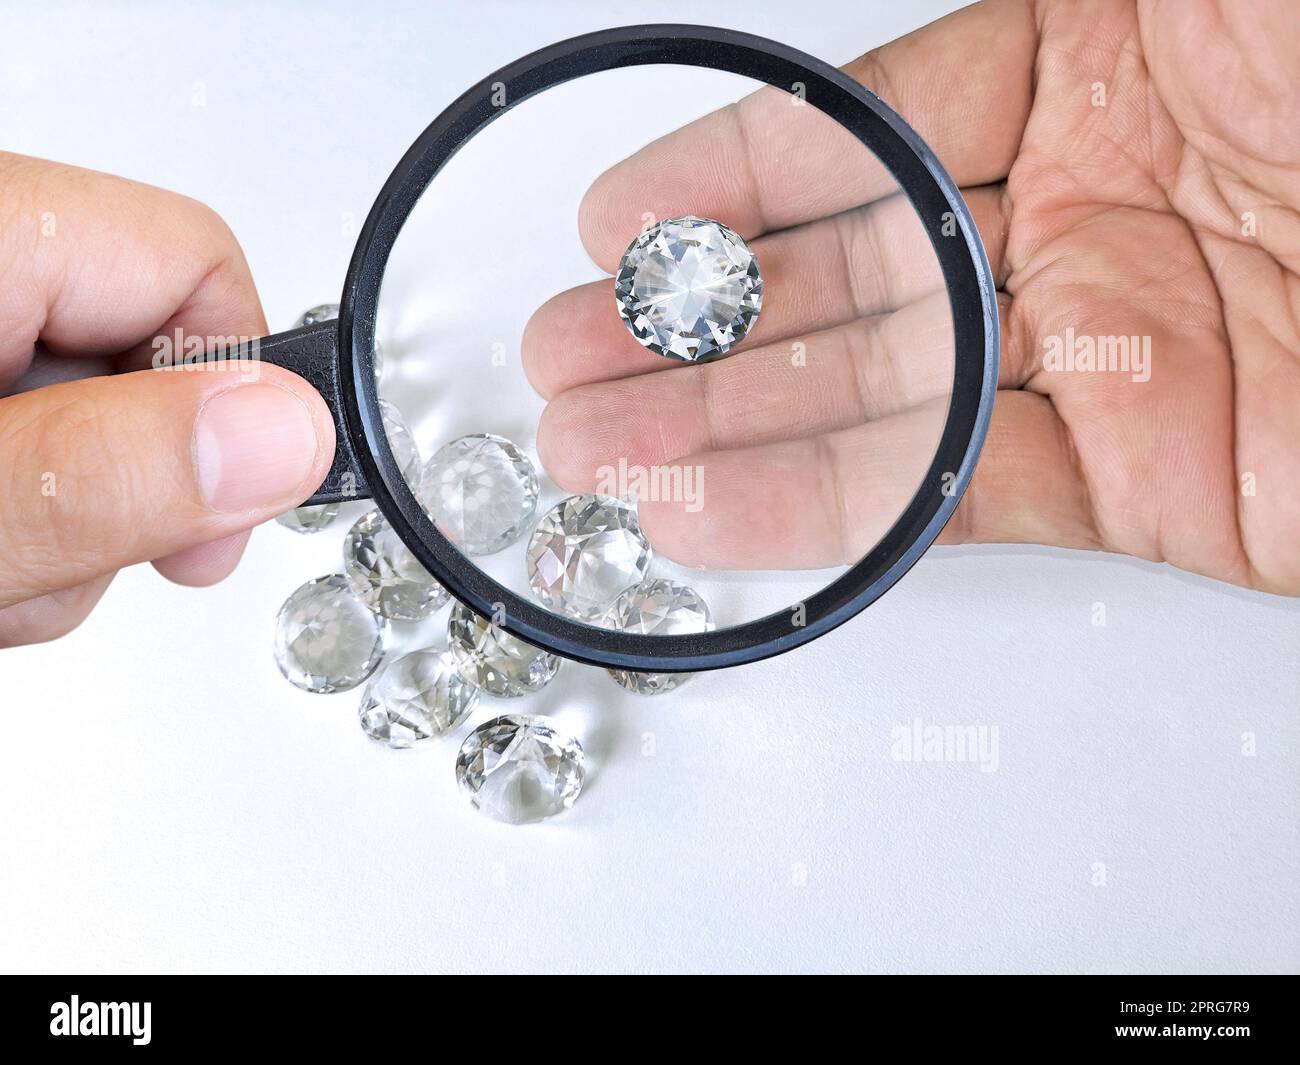 gems gems check diamond polished diamonds carat size diamonds trading and trading diamond grading loose gems Stock Photo